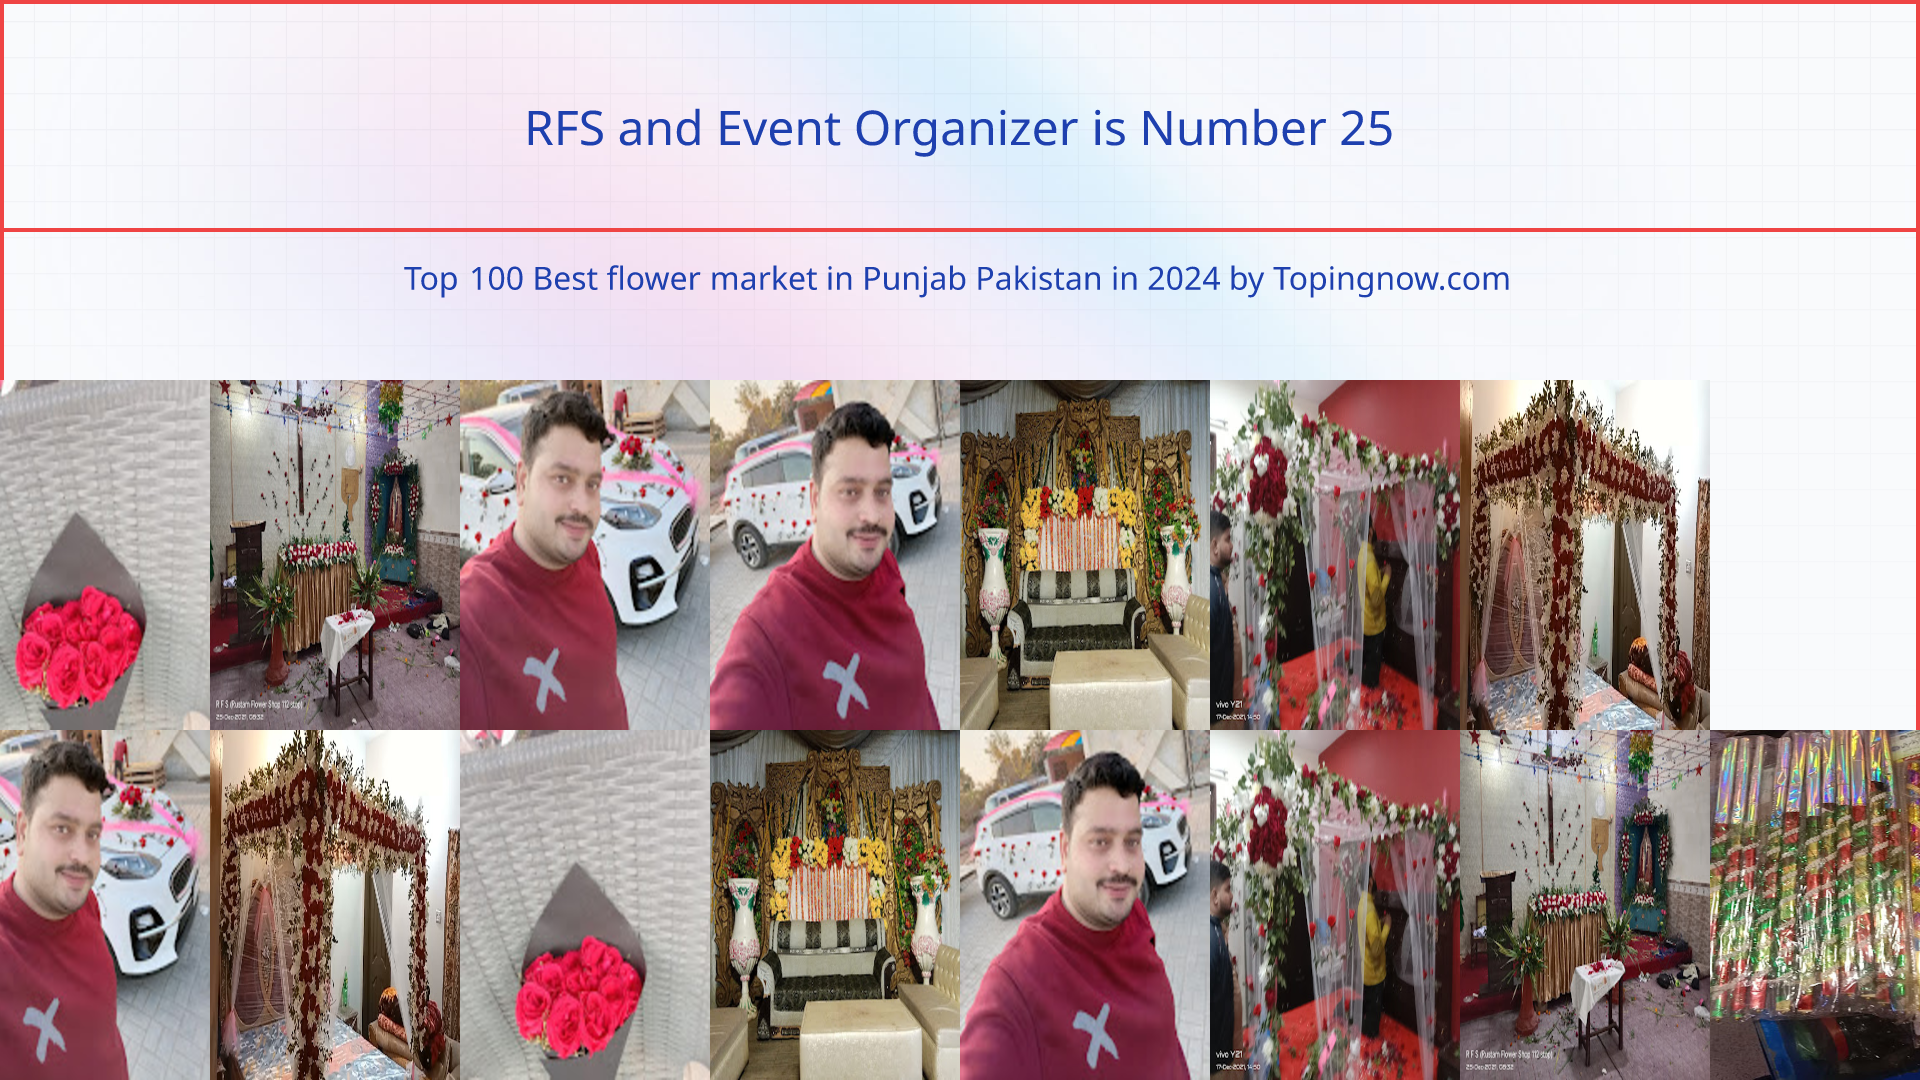 RFS and Event Organizer: Top 100 Best flower market in Punjab Pakistan in 2024